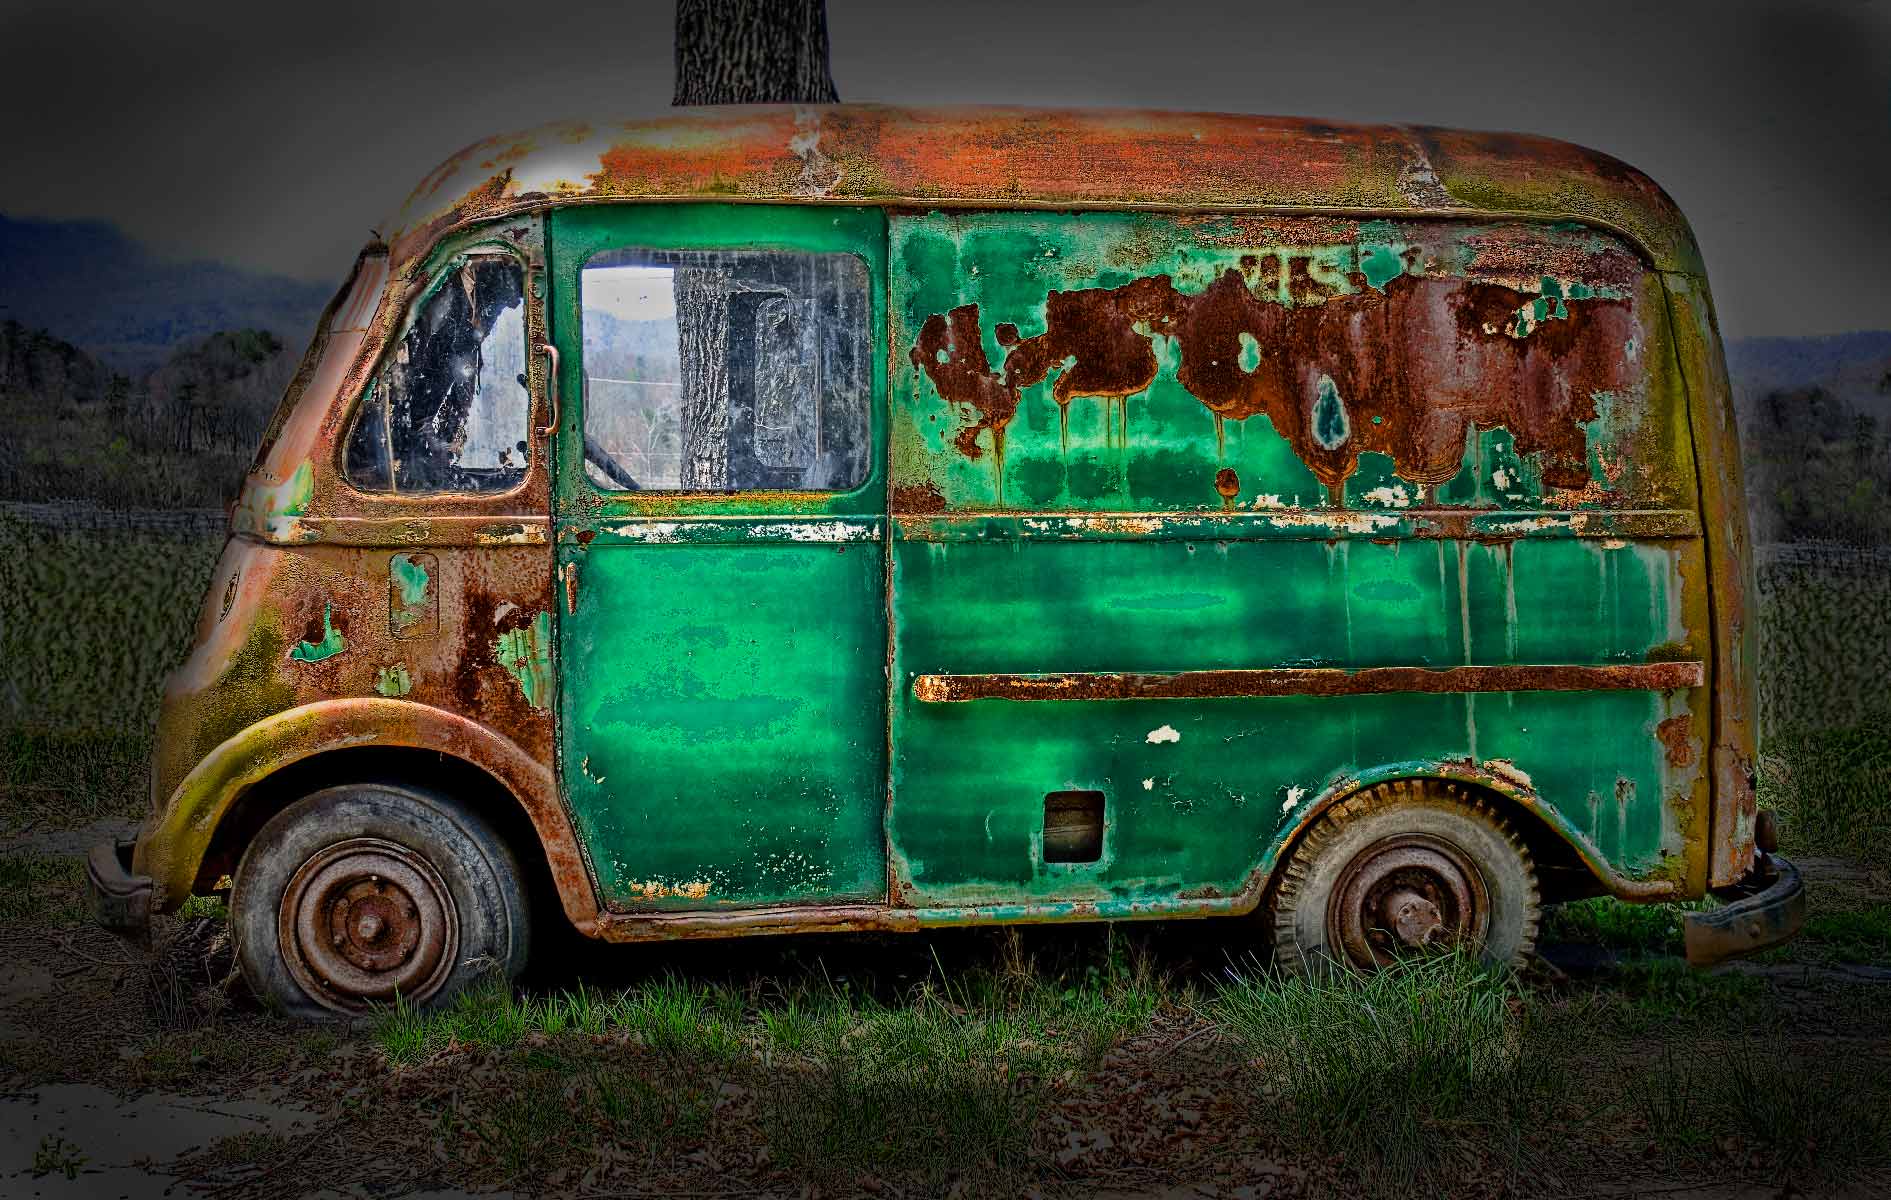 Rust on Metal "Old International Milk Truck"